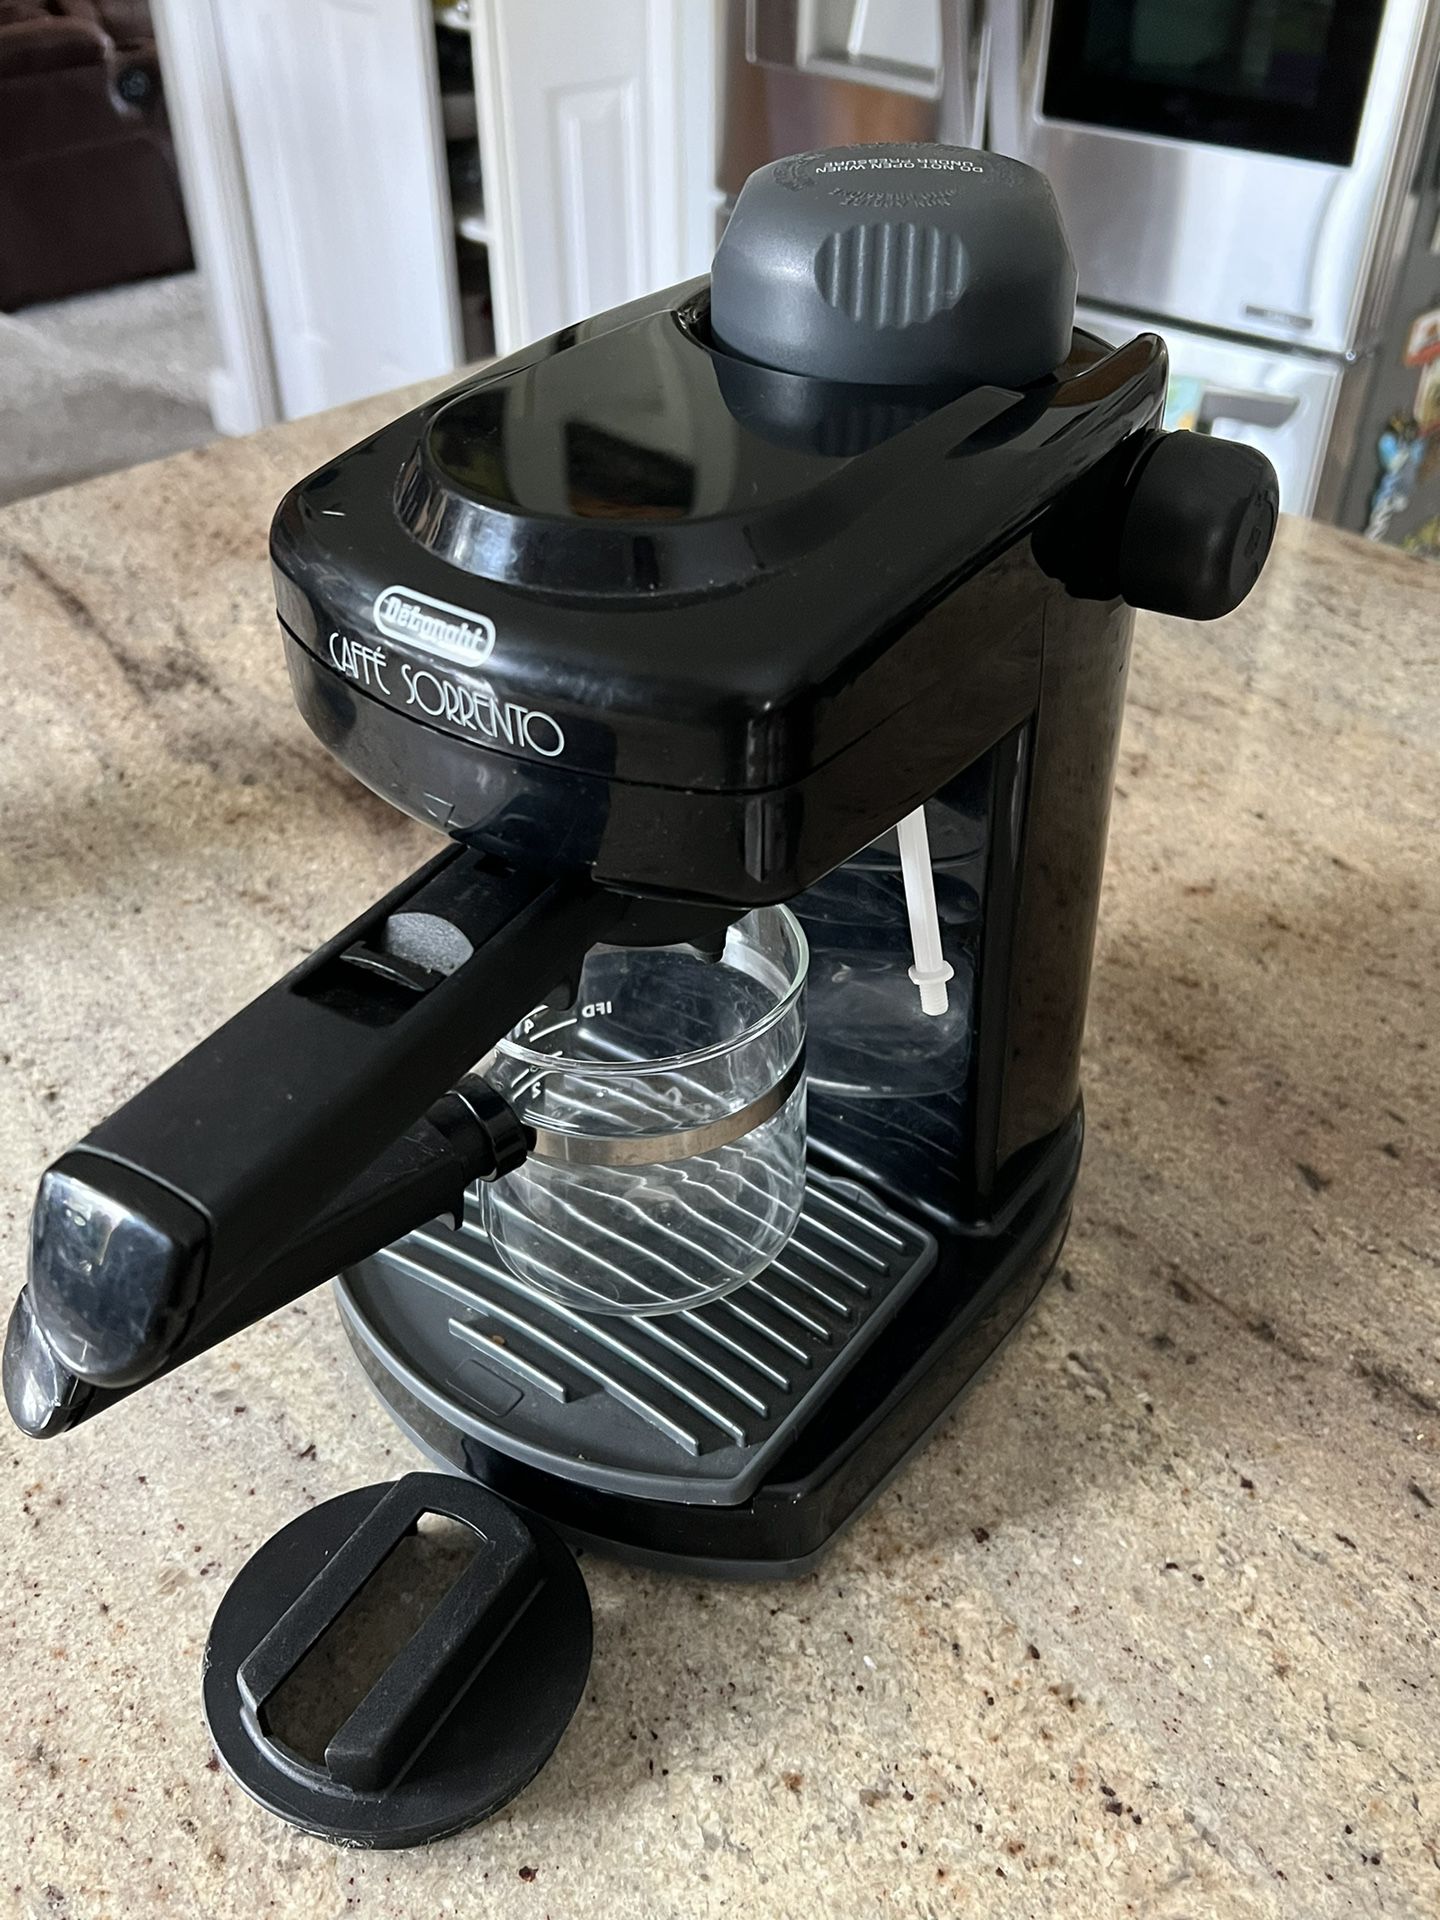 DeLonghi All In One Coffee And Espresso Machine for Sale in Yakima, WA -  OfferUp